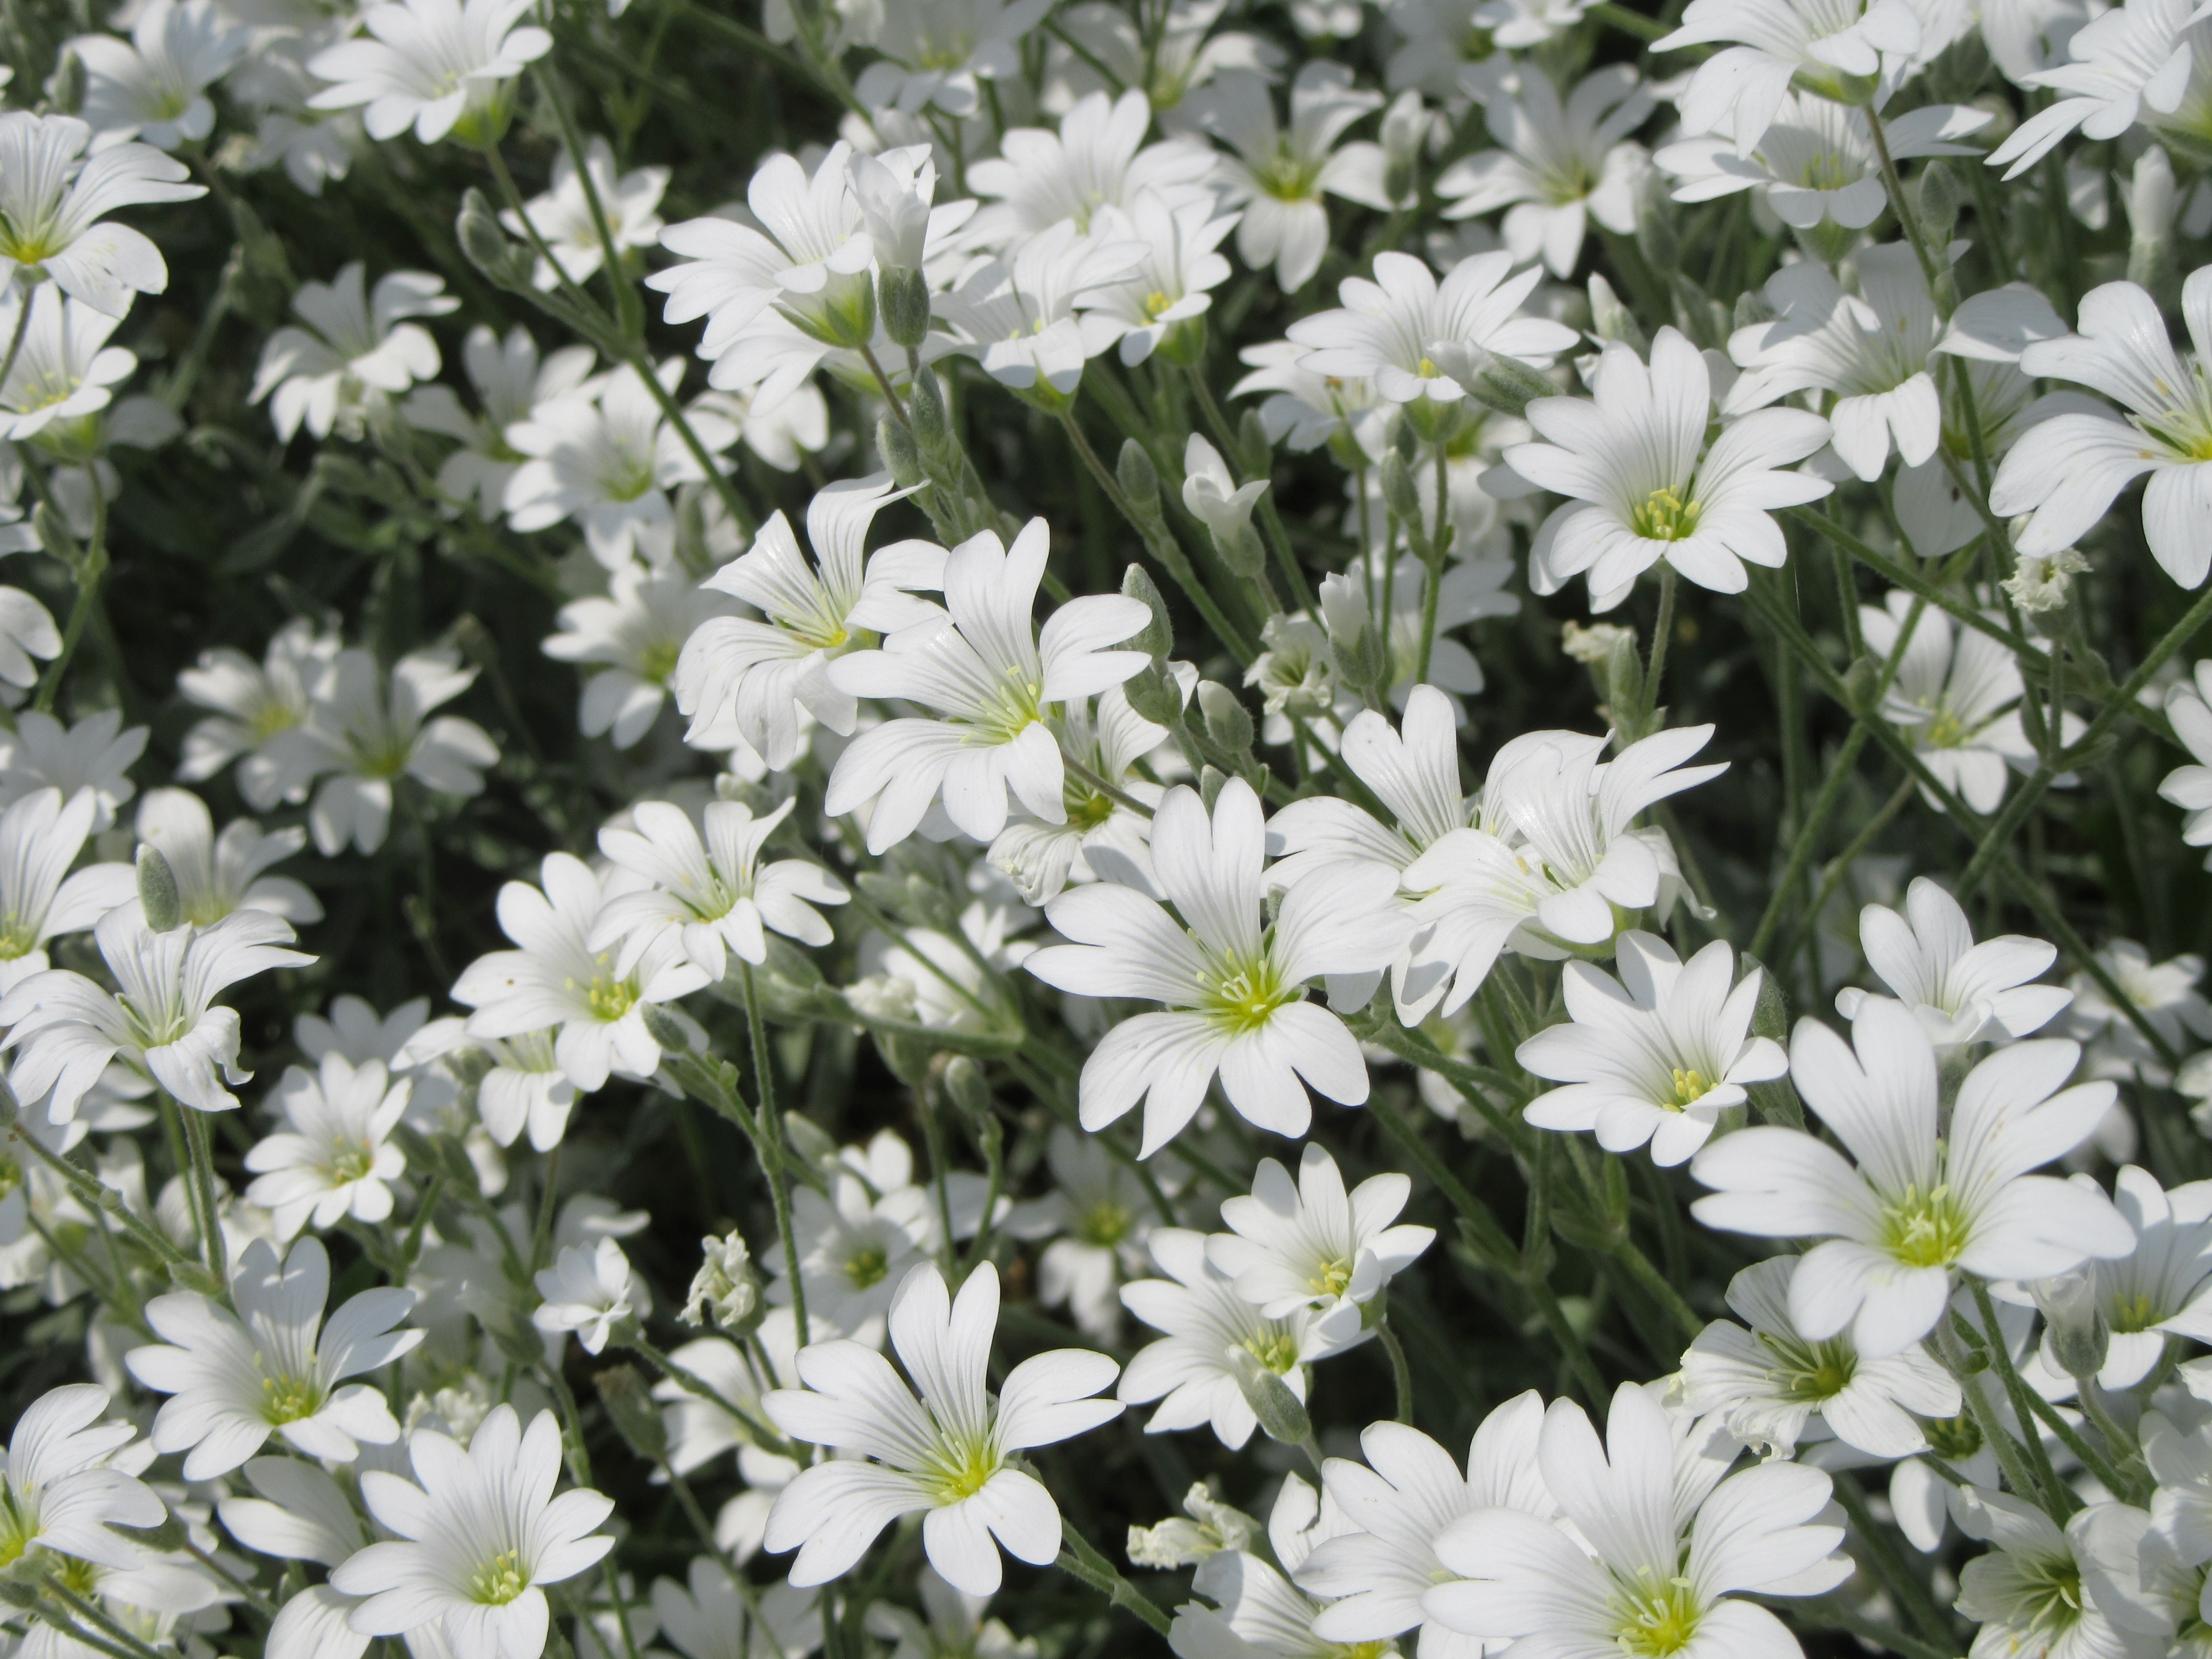 white 5 heart shaped petaled flowers